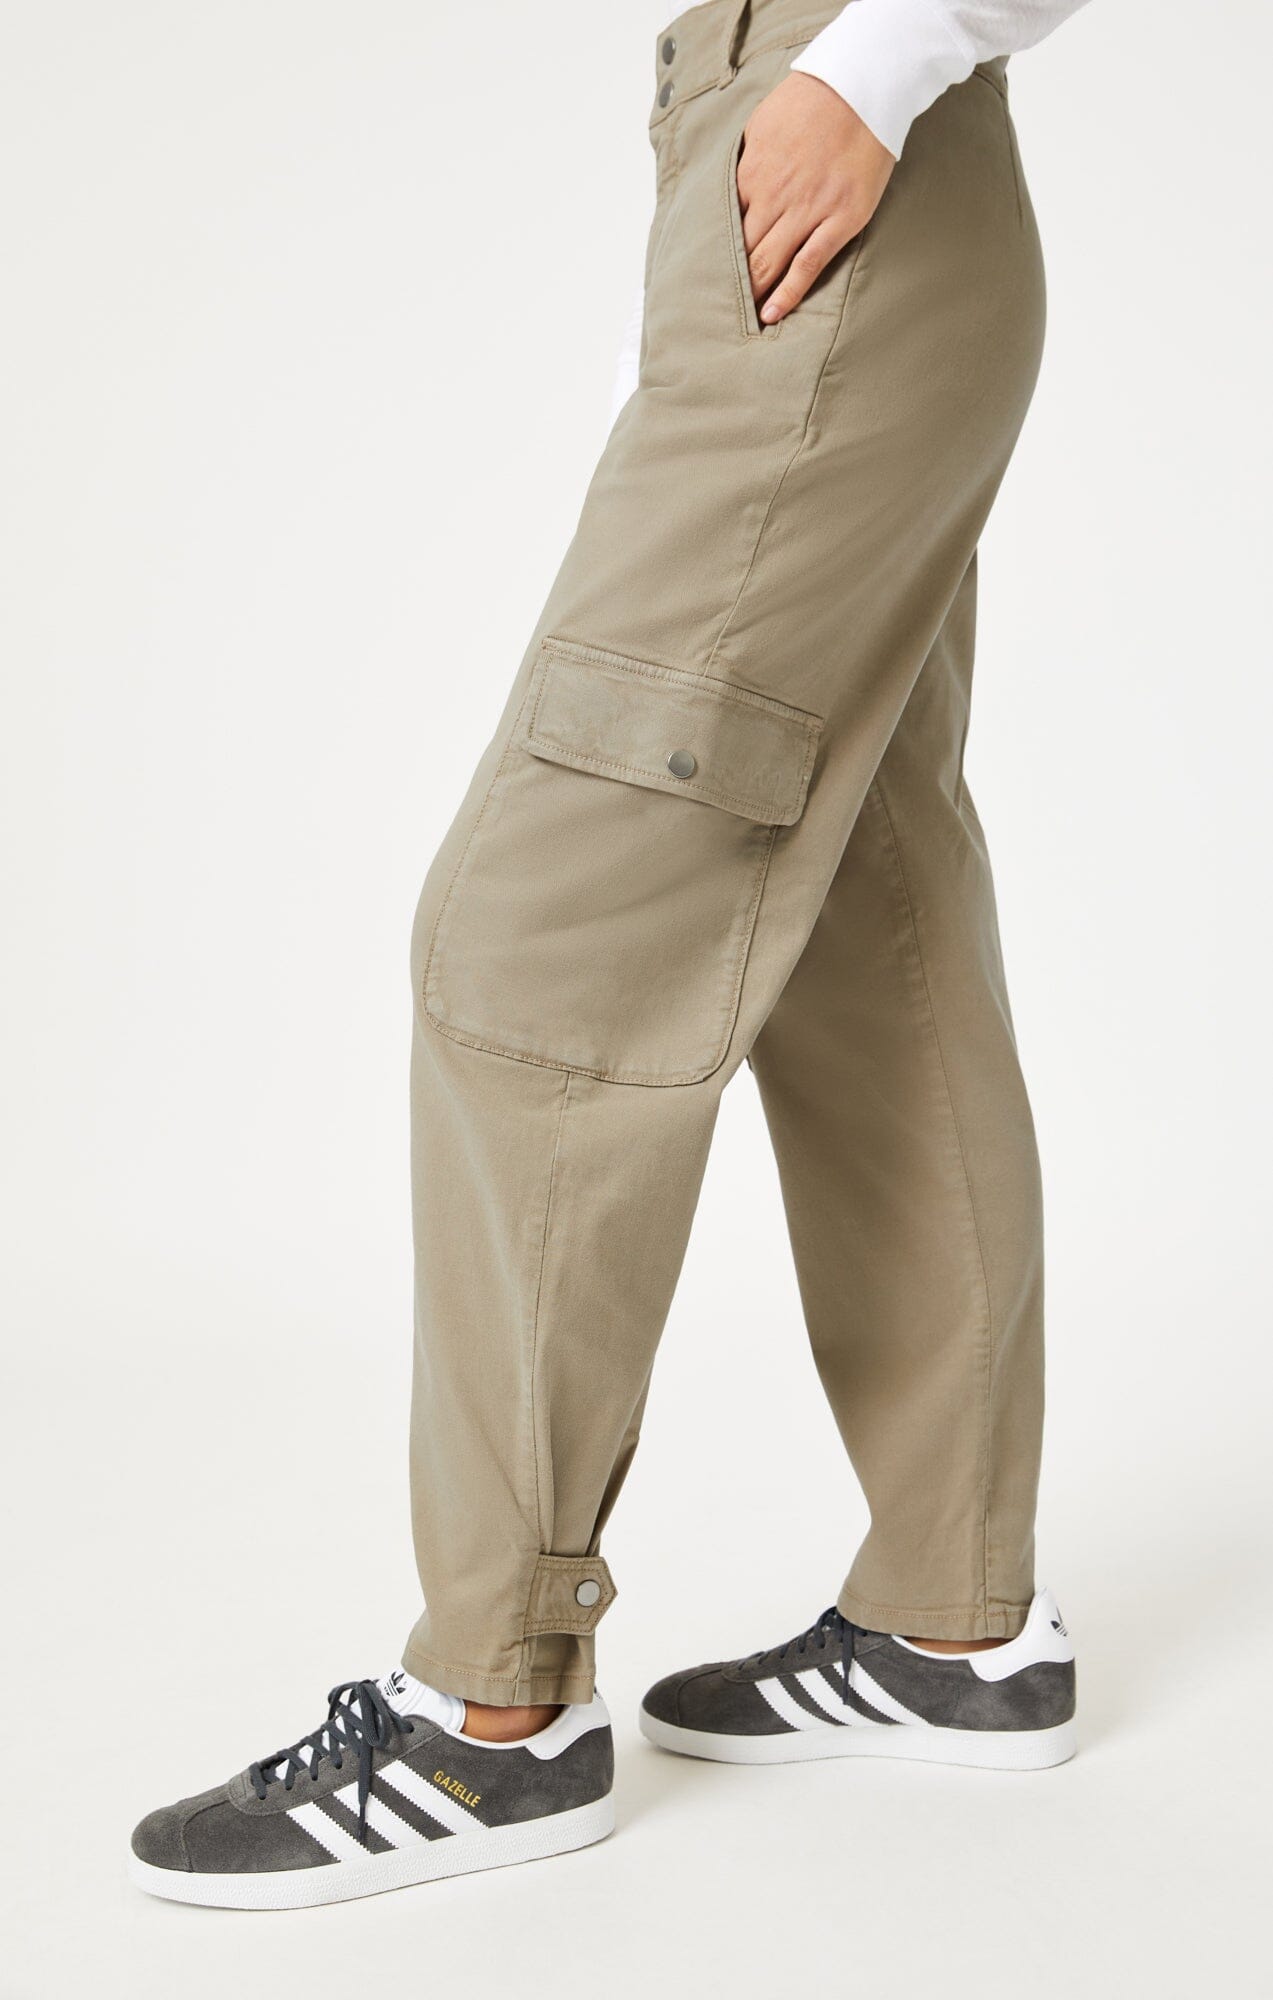 Olive Green Cargo Pants - Straight Leg Pants - Drawstring Pants - Lulus